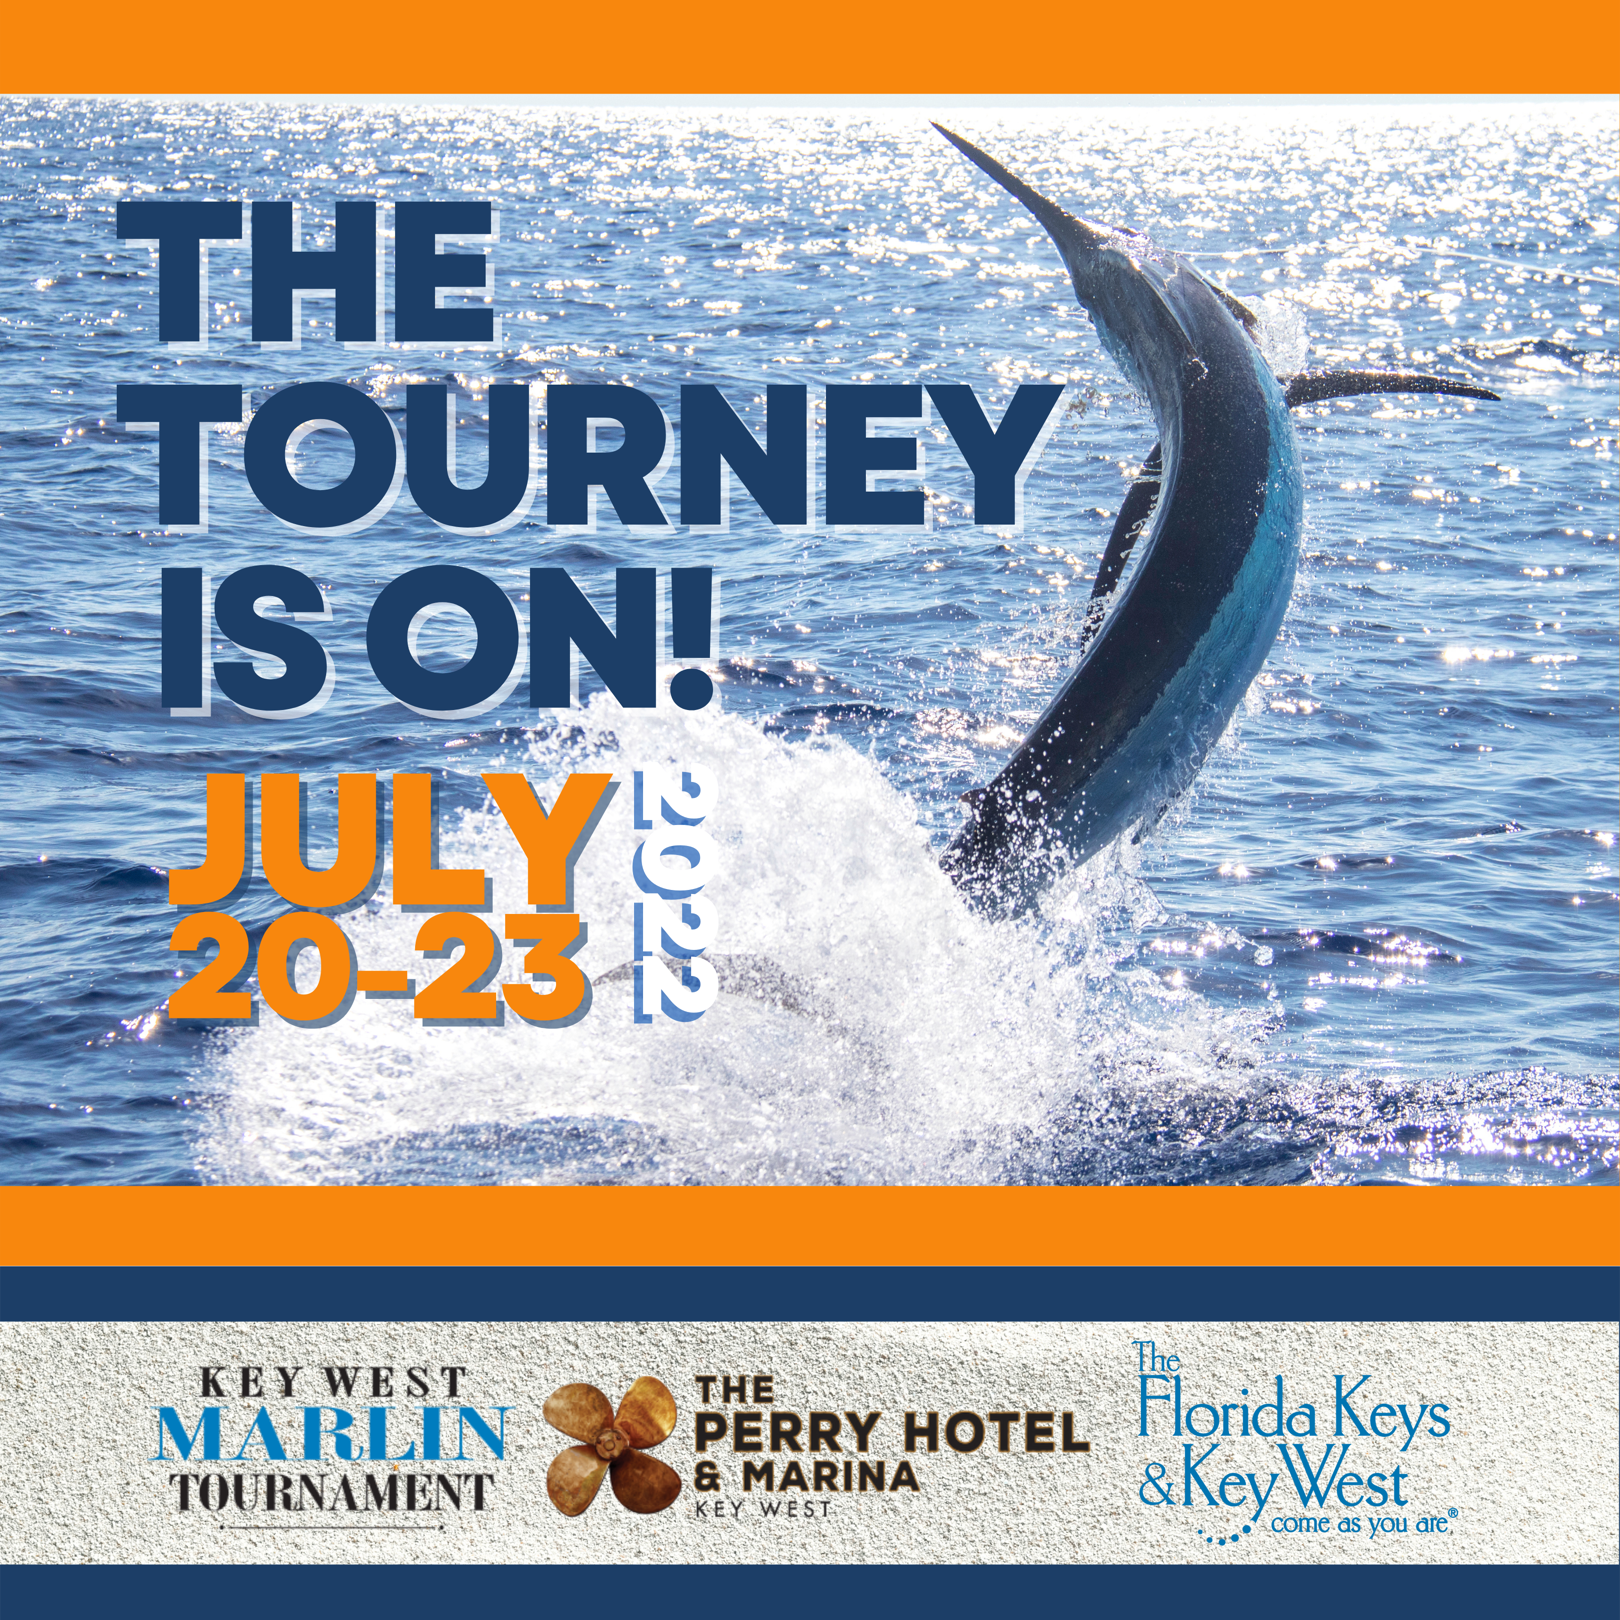 Key West Marlin Tournament set for July 20-23, 2022